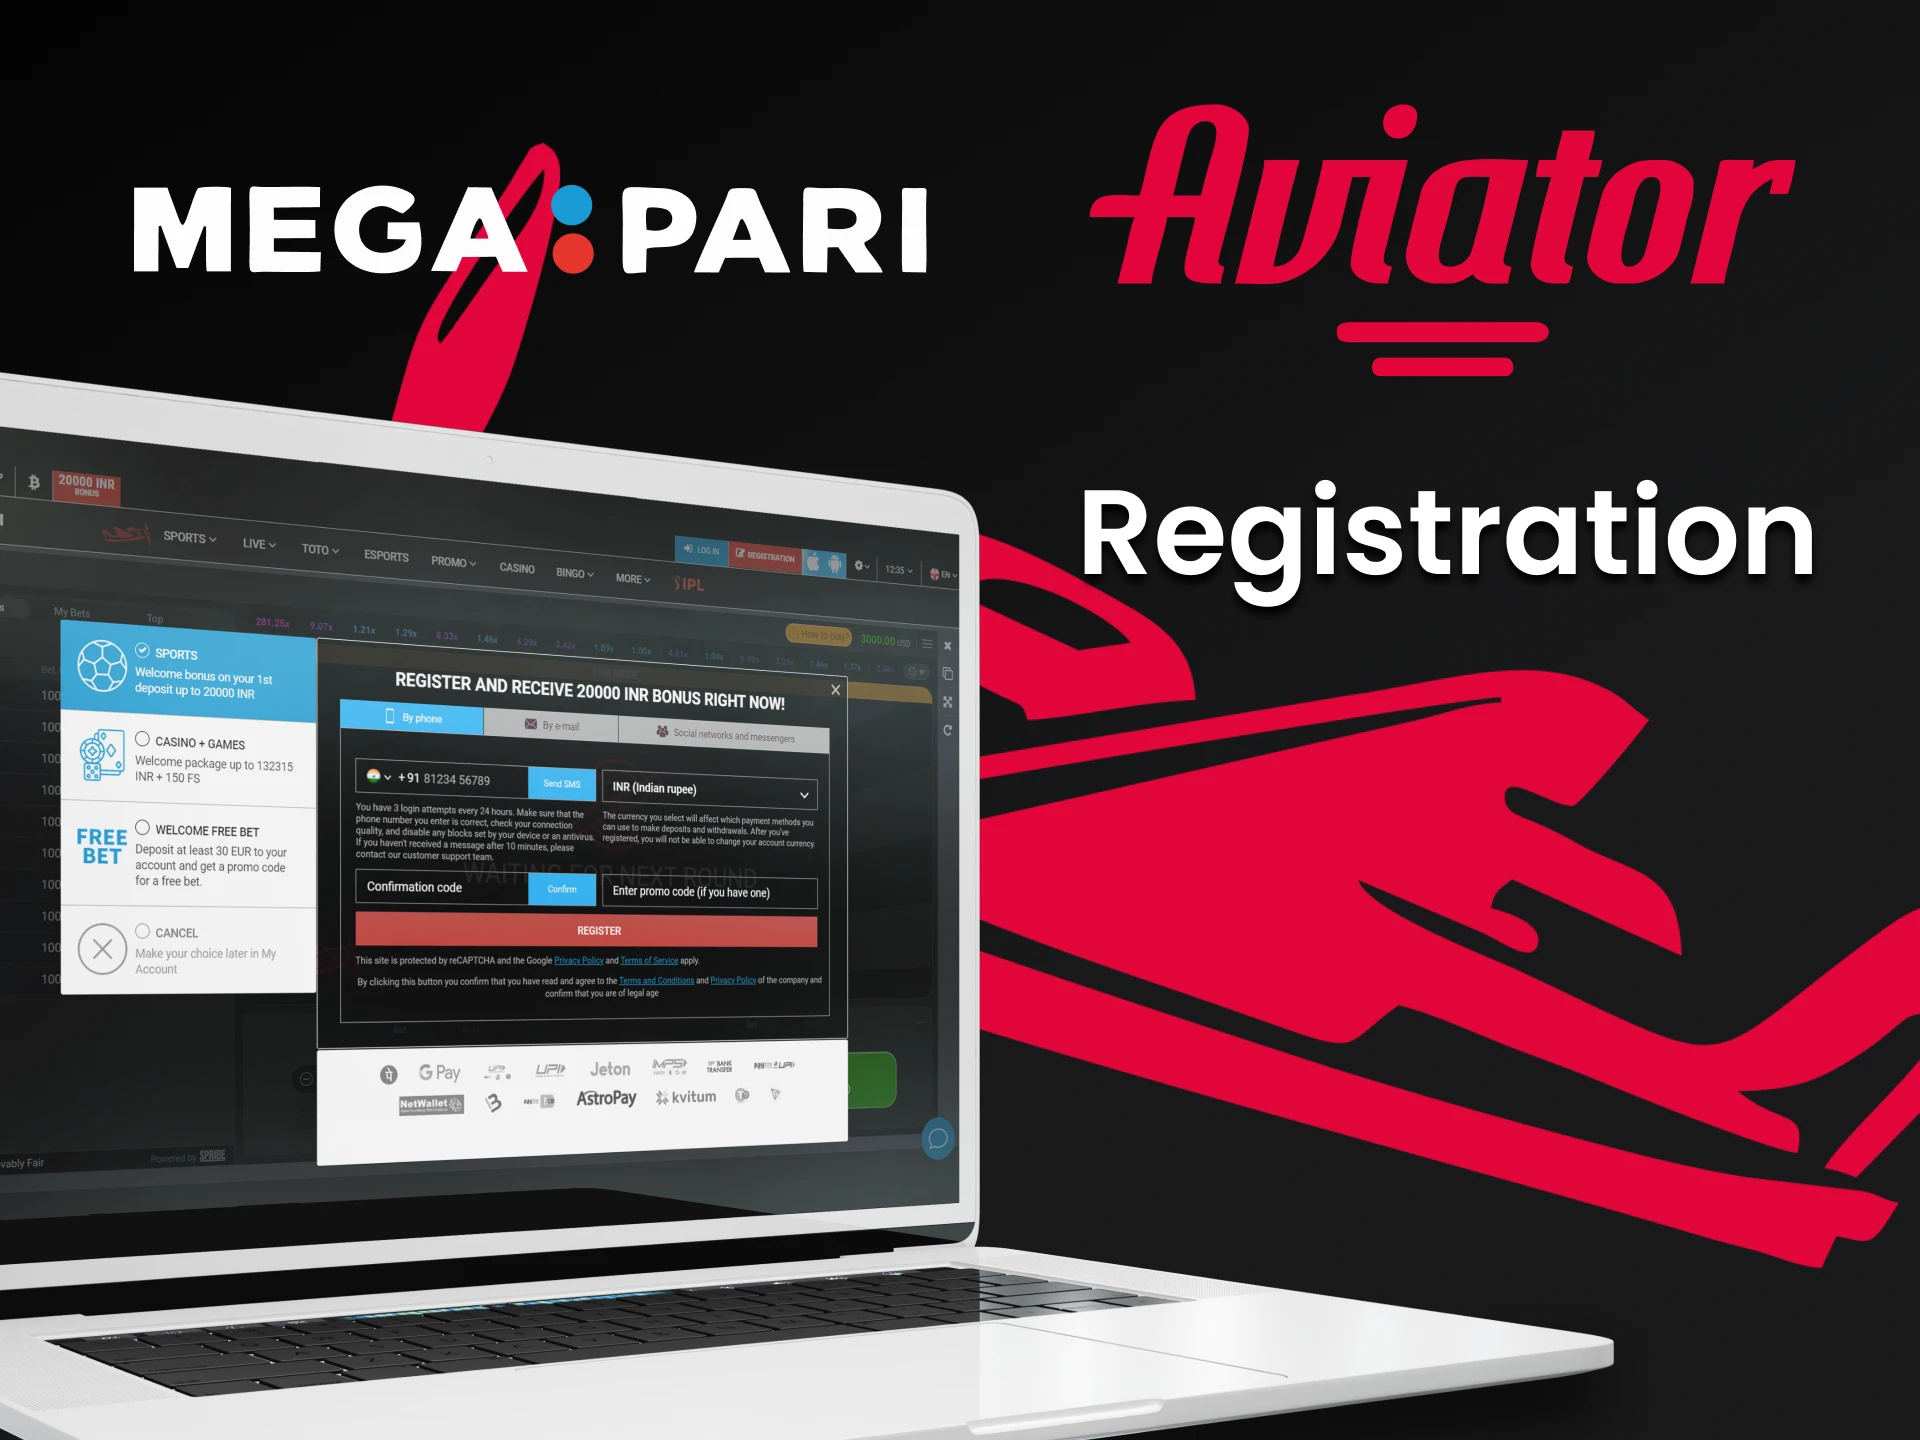 Register on the Megapari website to play Aviator.